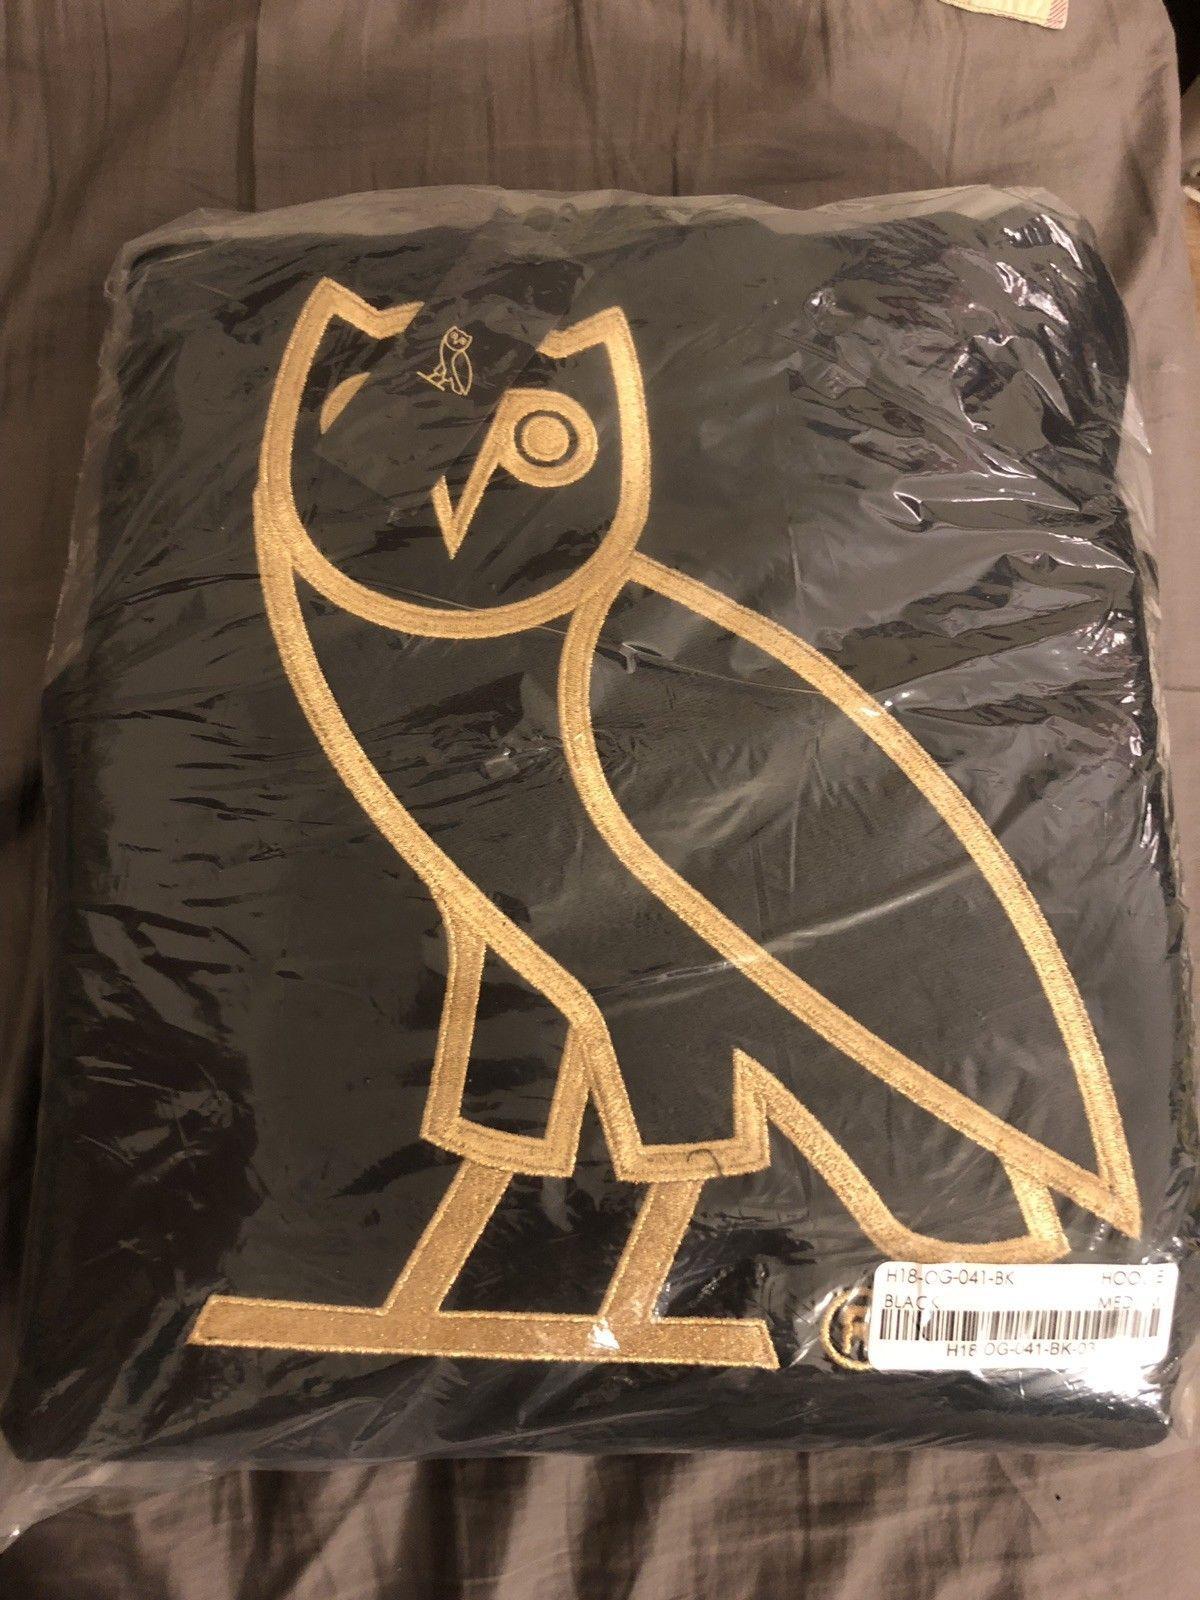 OVOXO Owl Logo - Drake Octobers Very Own OVO Owl Hoodie Sweatshirt | eBay